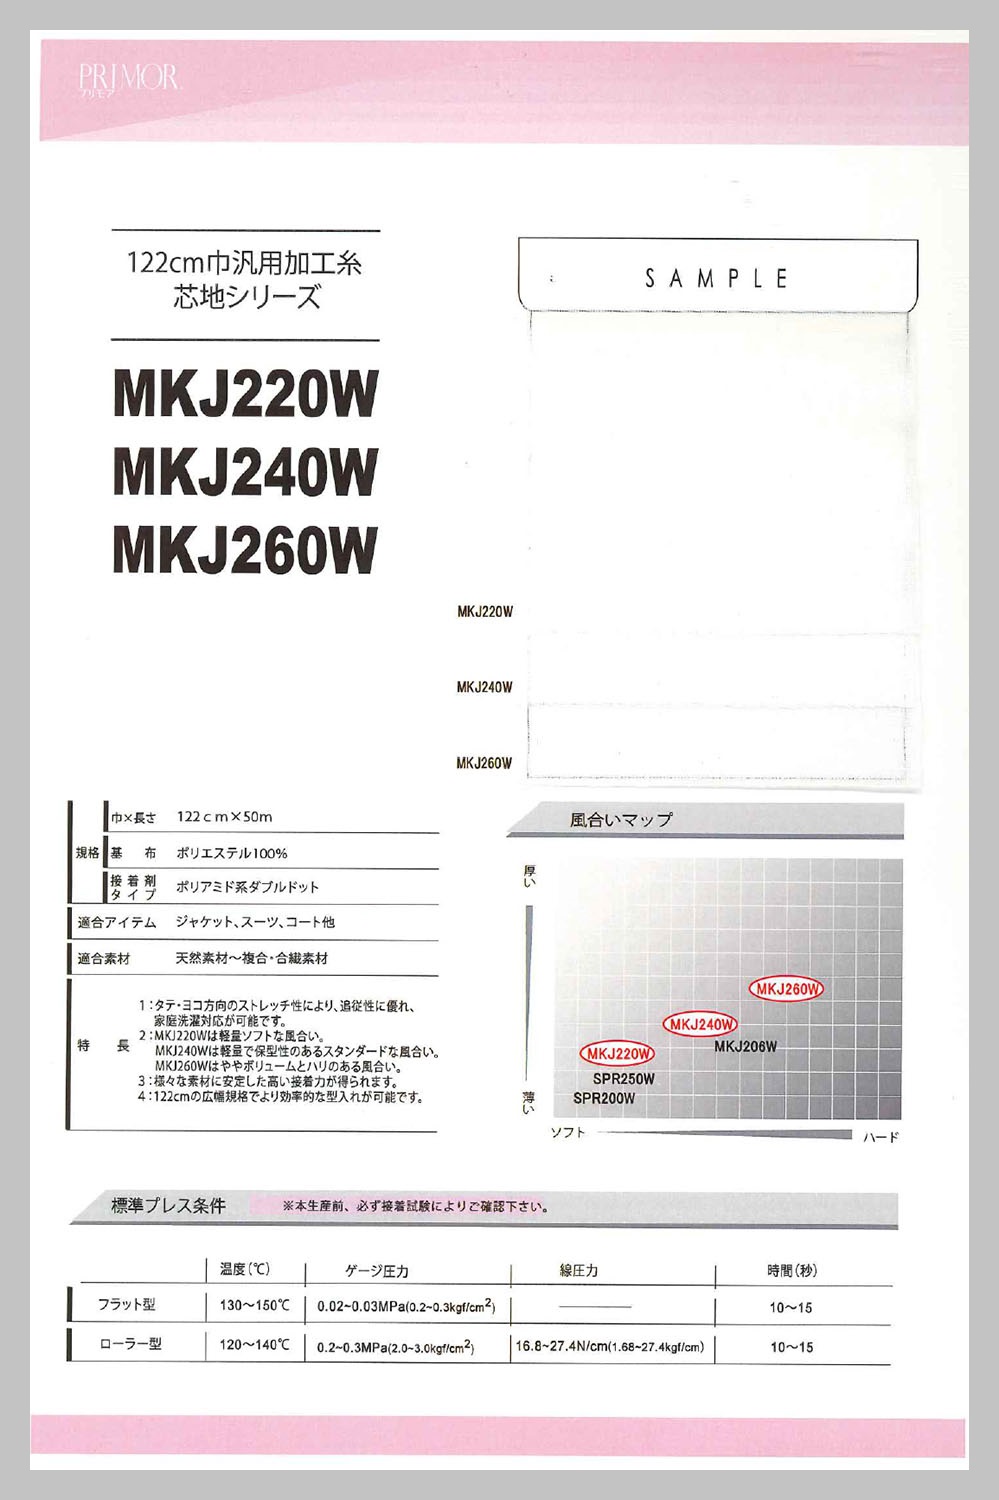 MKJ220W ジャケット・コート用汎用加工糸芯地日中グローバル展開シリーズ